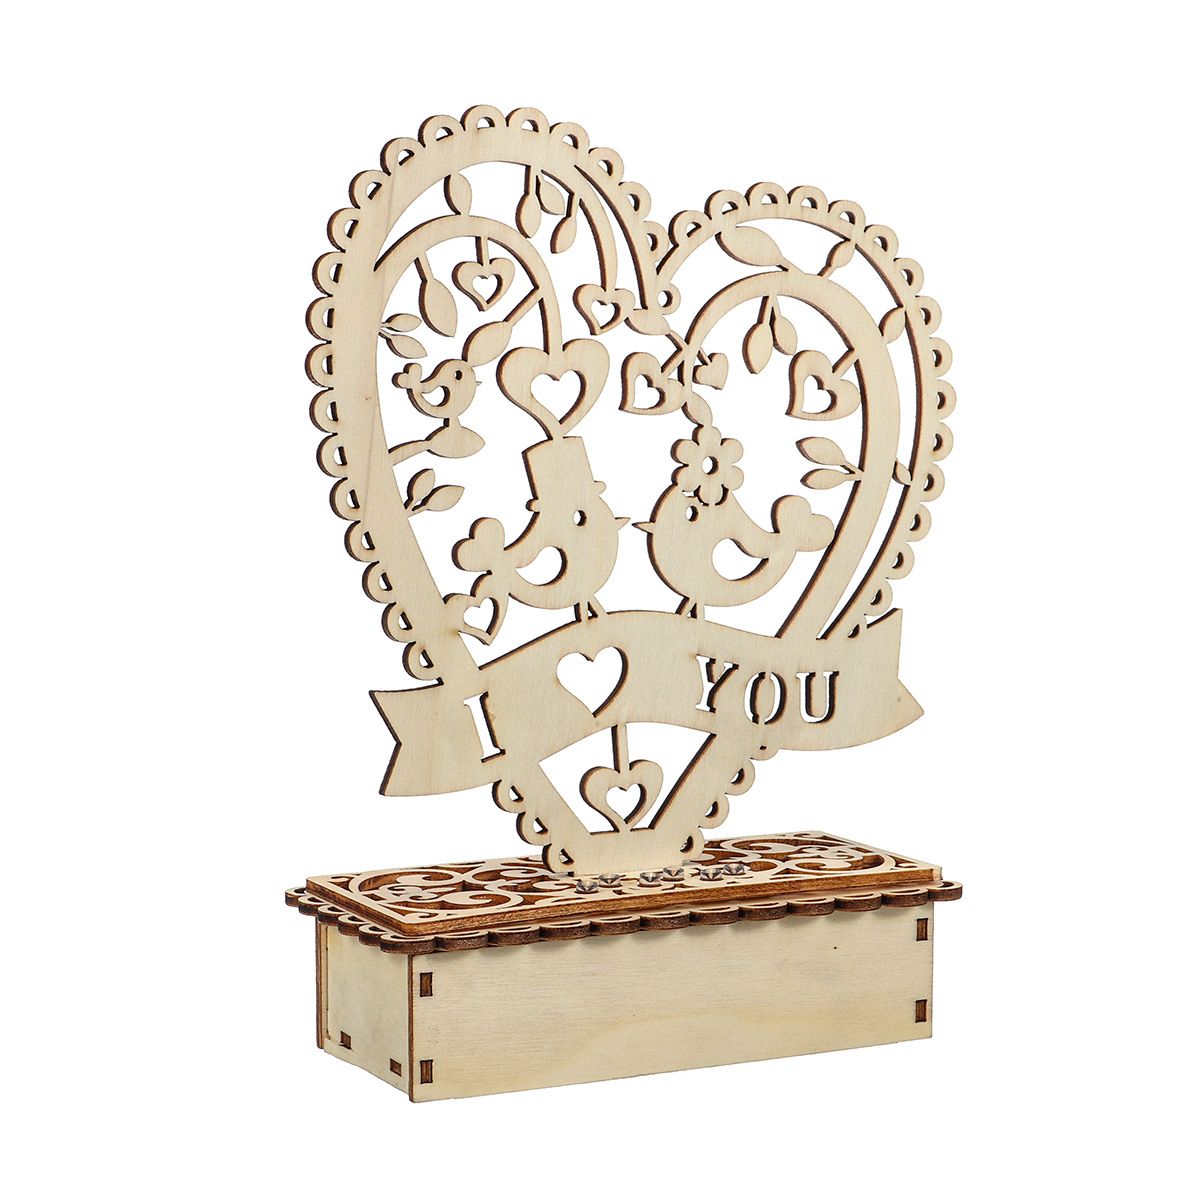 Romantic-Lovebirds-Wedding-LED-Light-Wooden-Ornament-Bridal-Heart-Shape-Decorations-1548243